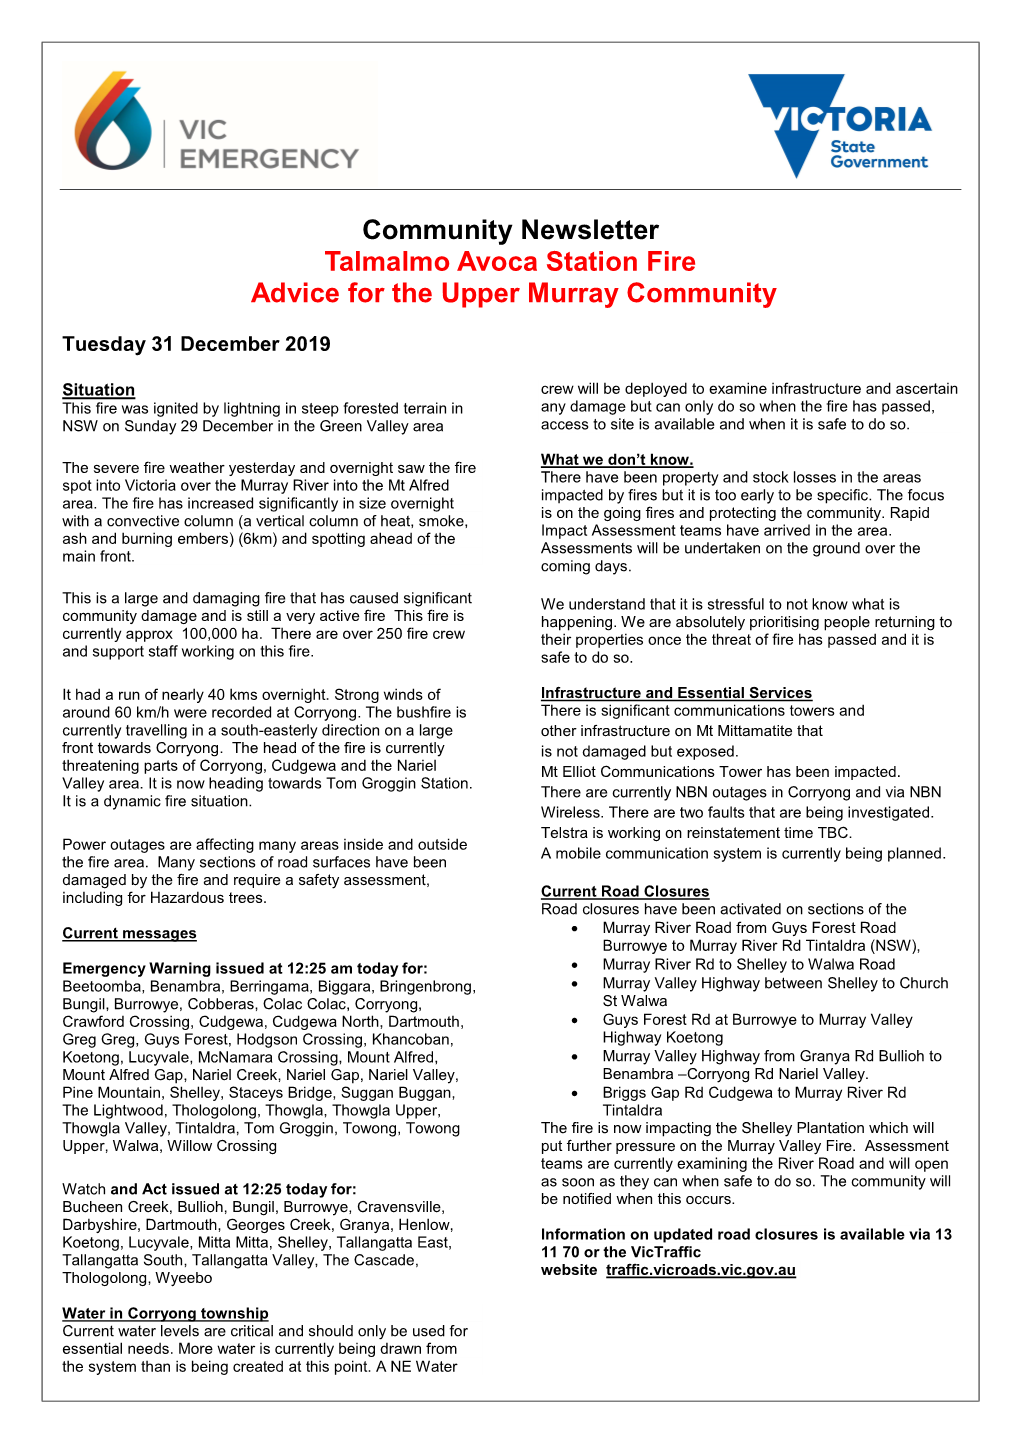 Community Newsletter Talmalmo Avoca Station Fire Advice for the Upper Murray Community